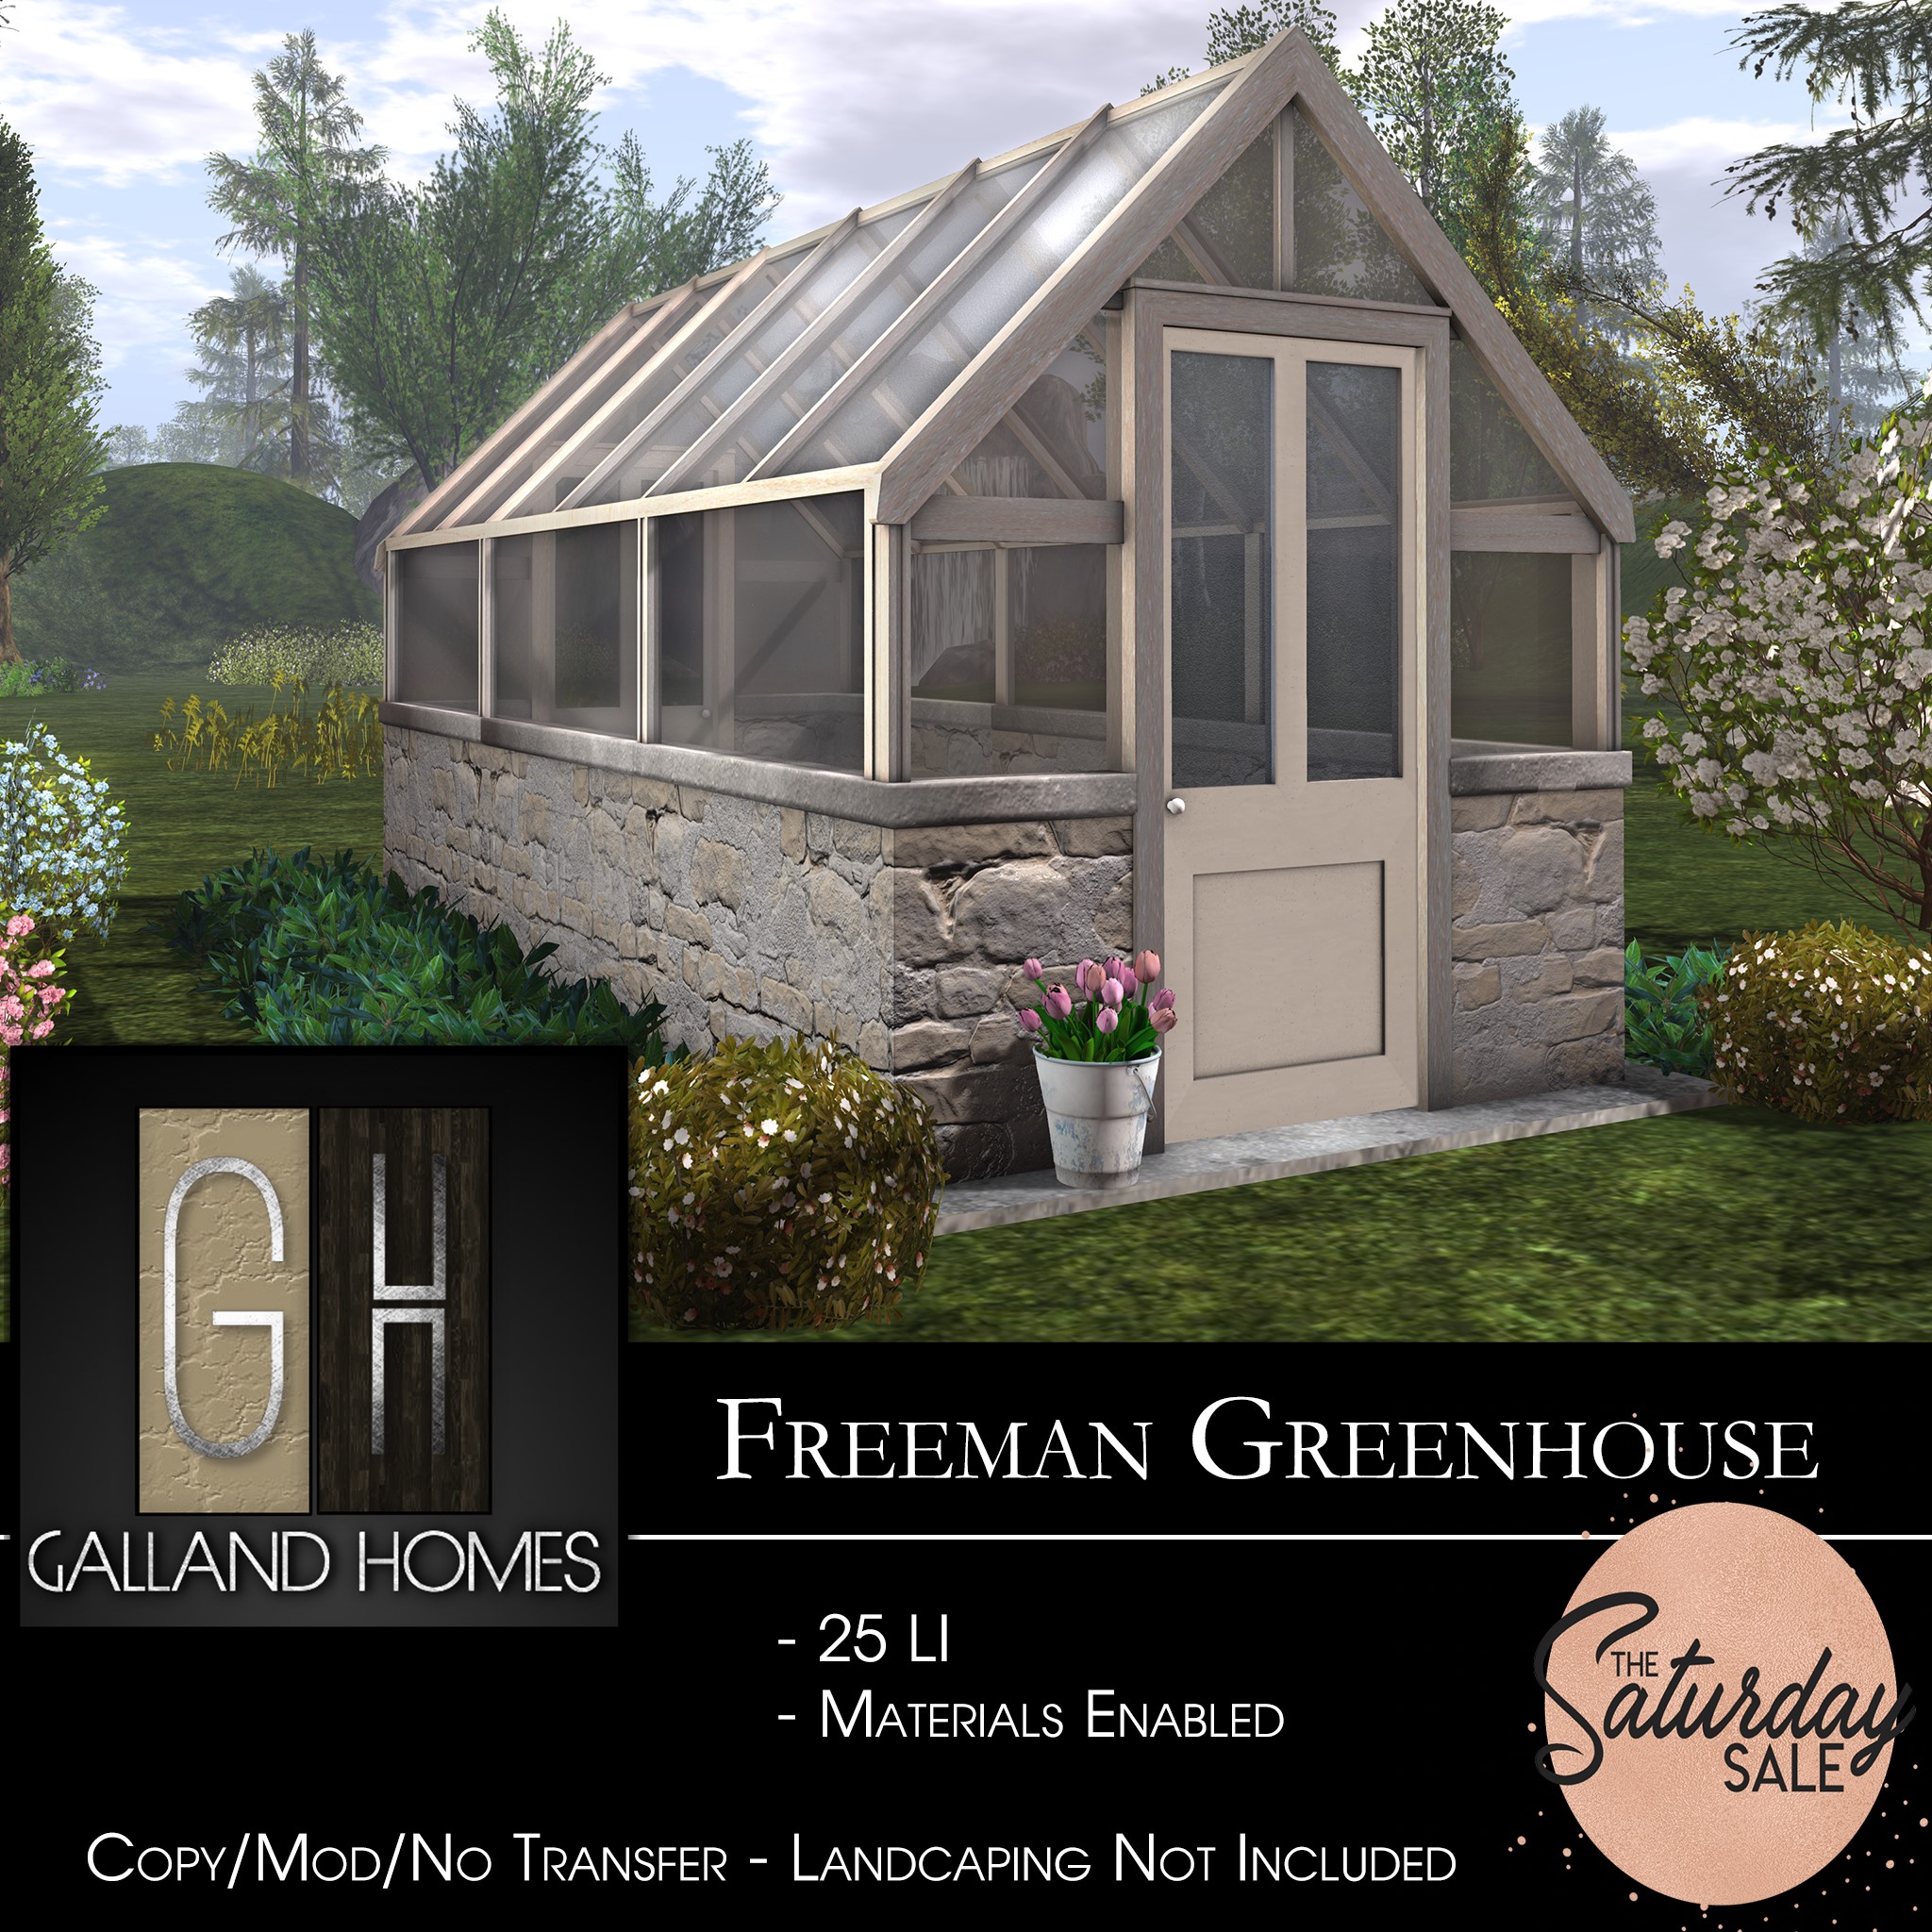 Galland Homes – Freeman Greenhouse